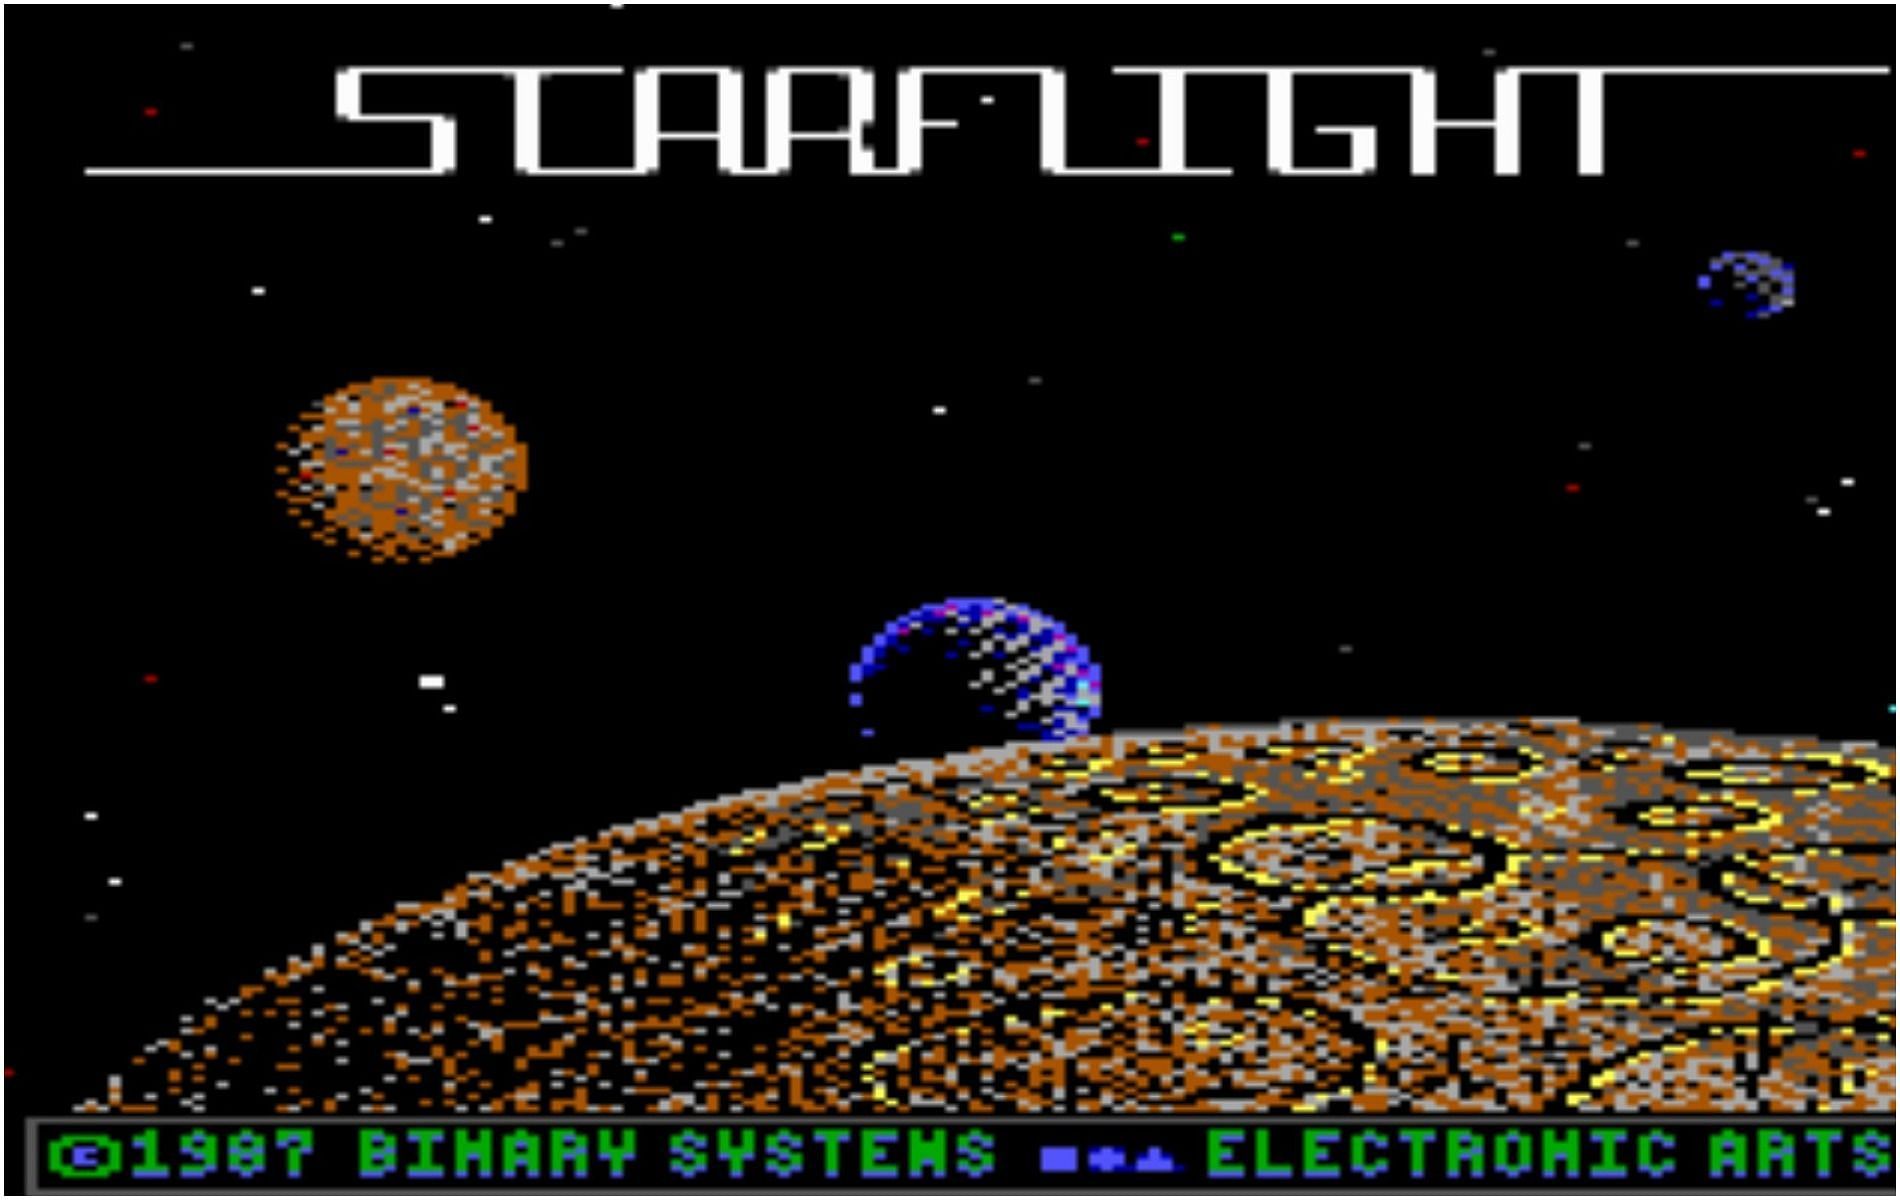 Starflight (image via Binary Systems)